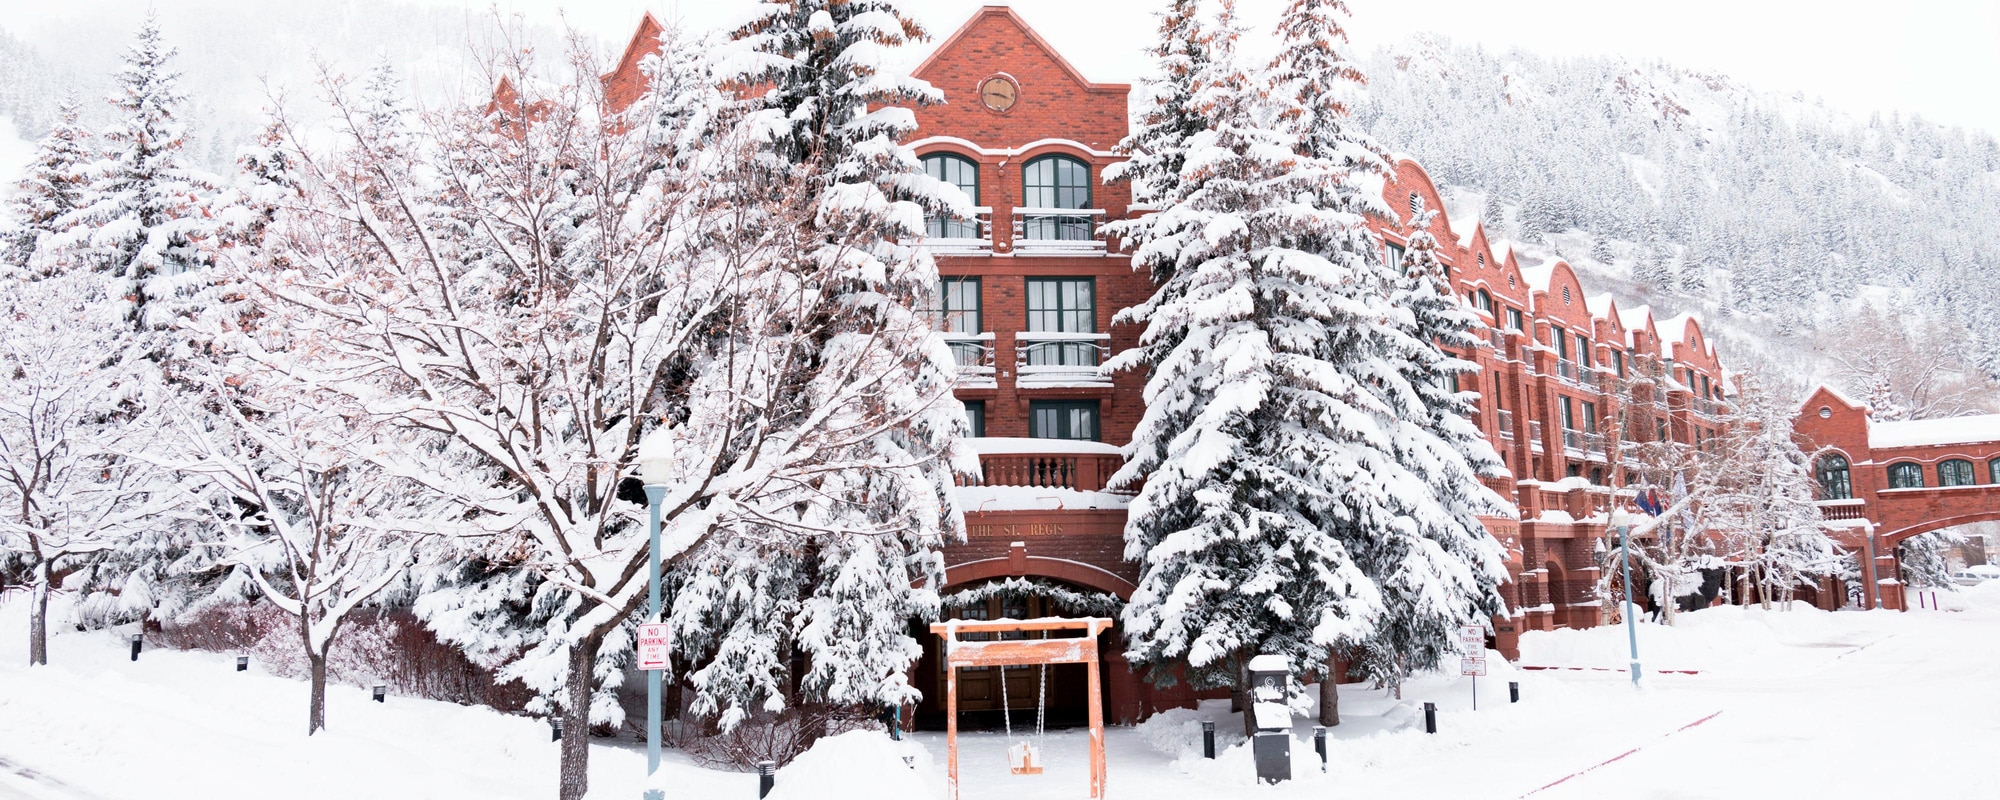 Aspen, Colorado Winter Activities | The St. Regis Aspen Resort